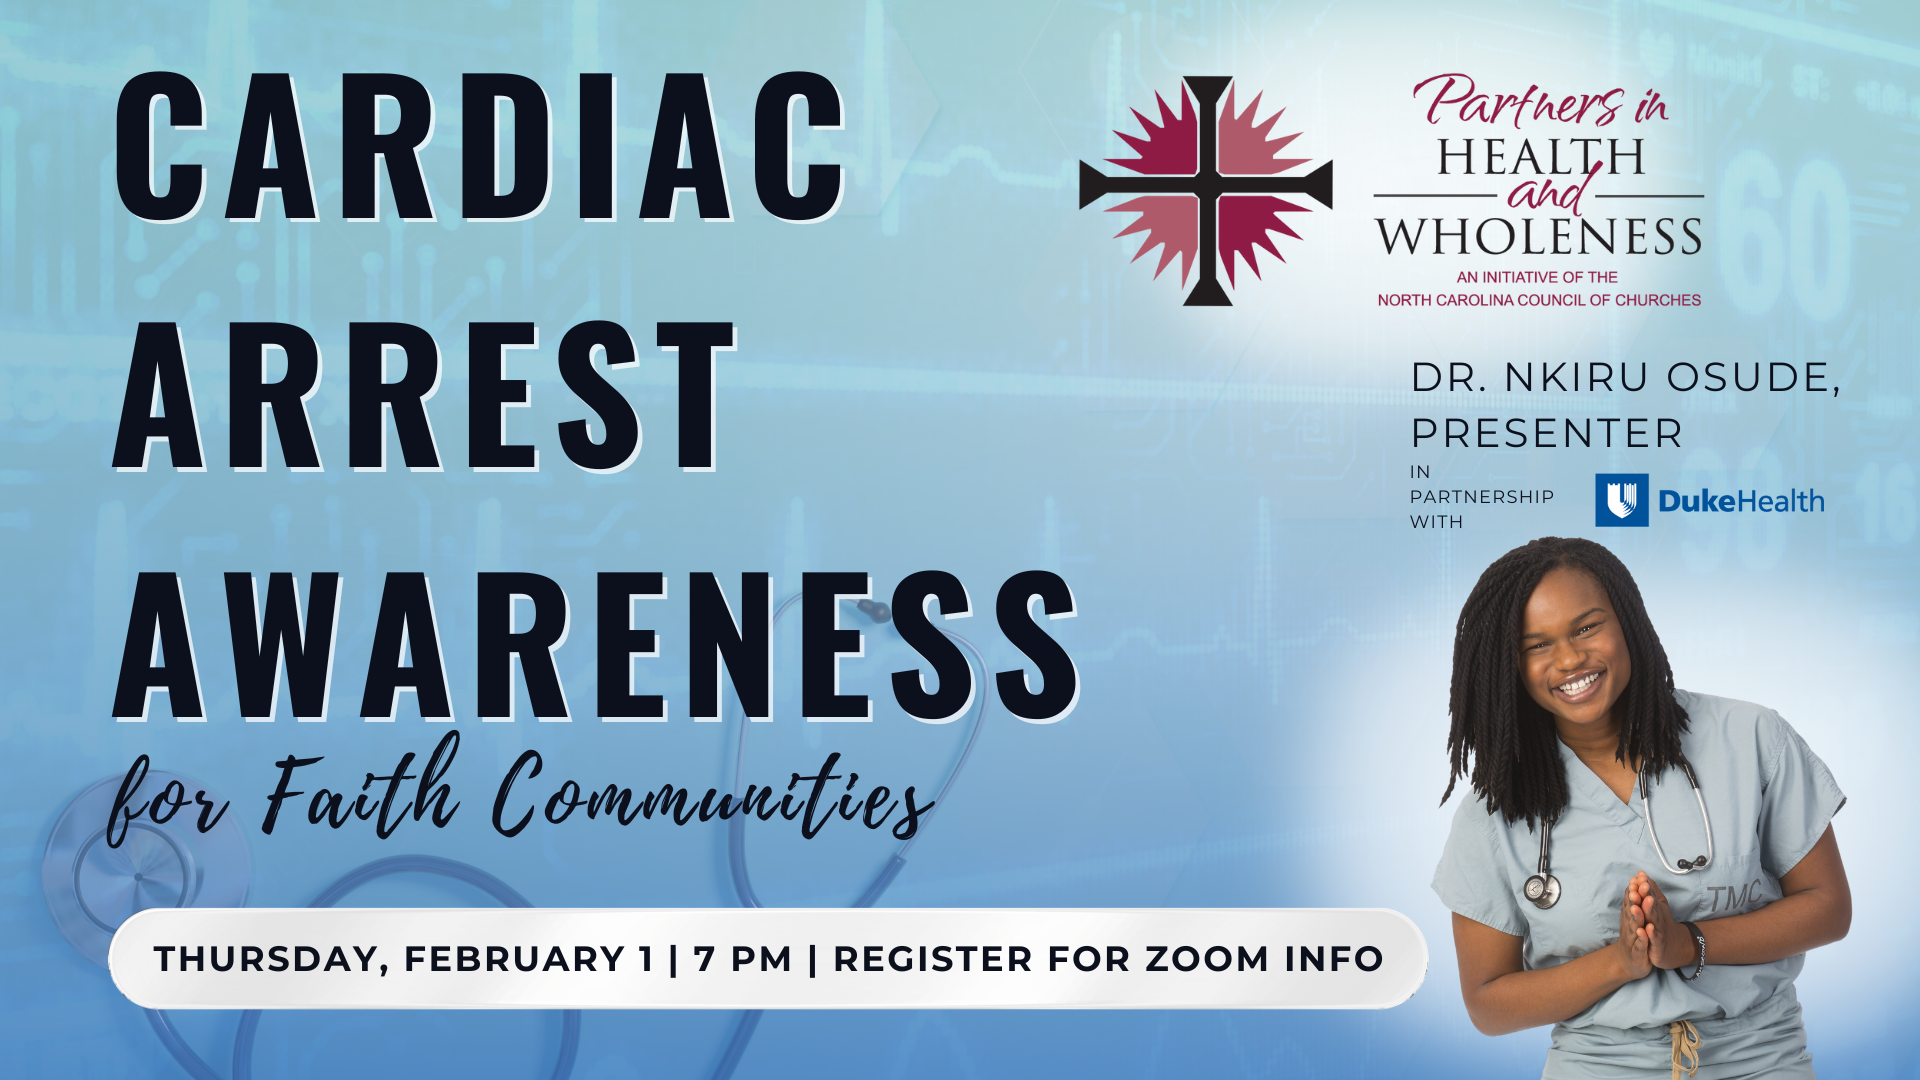 Cardiac Arrest Awareness for Faith Communities